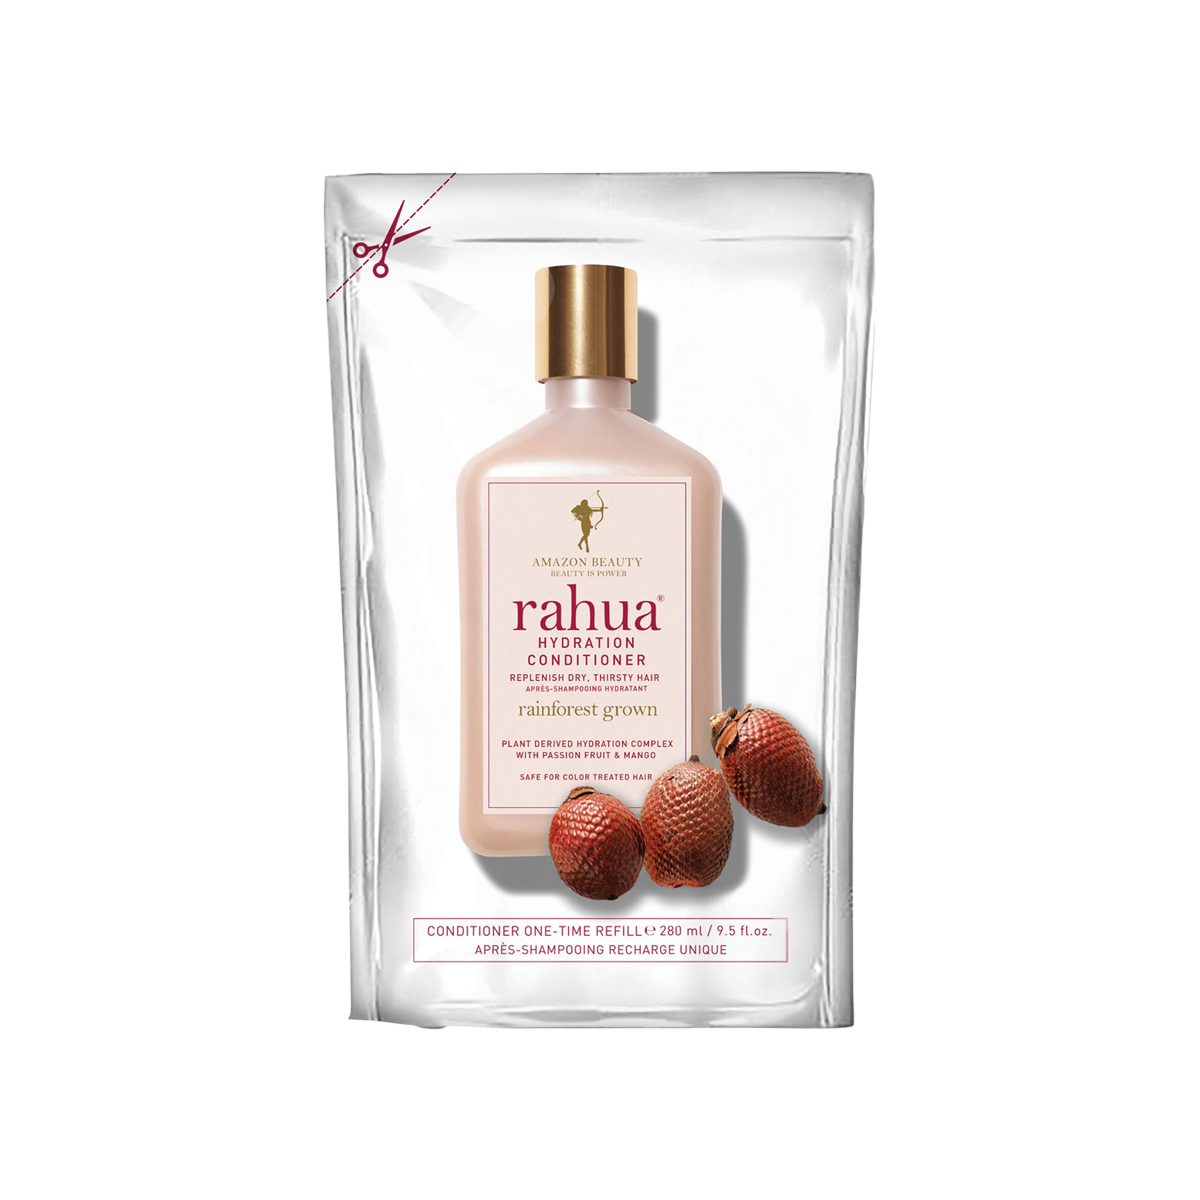 Rahua - Hydration Conditioner Refill